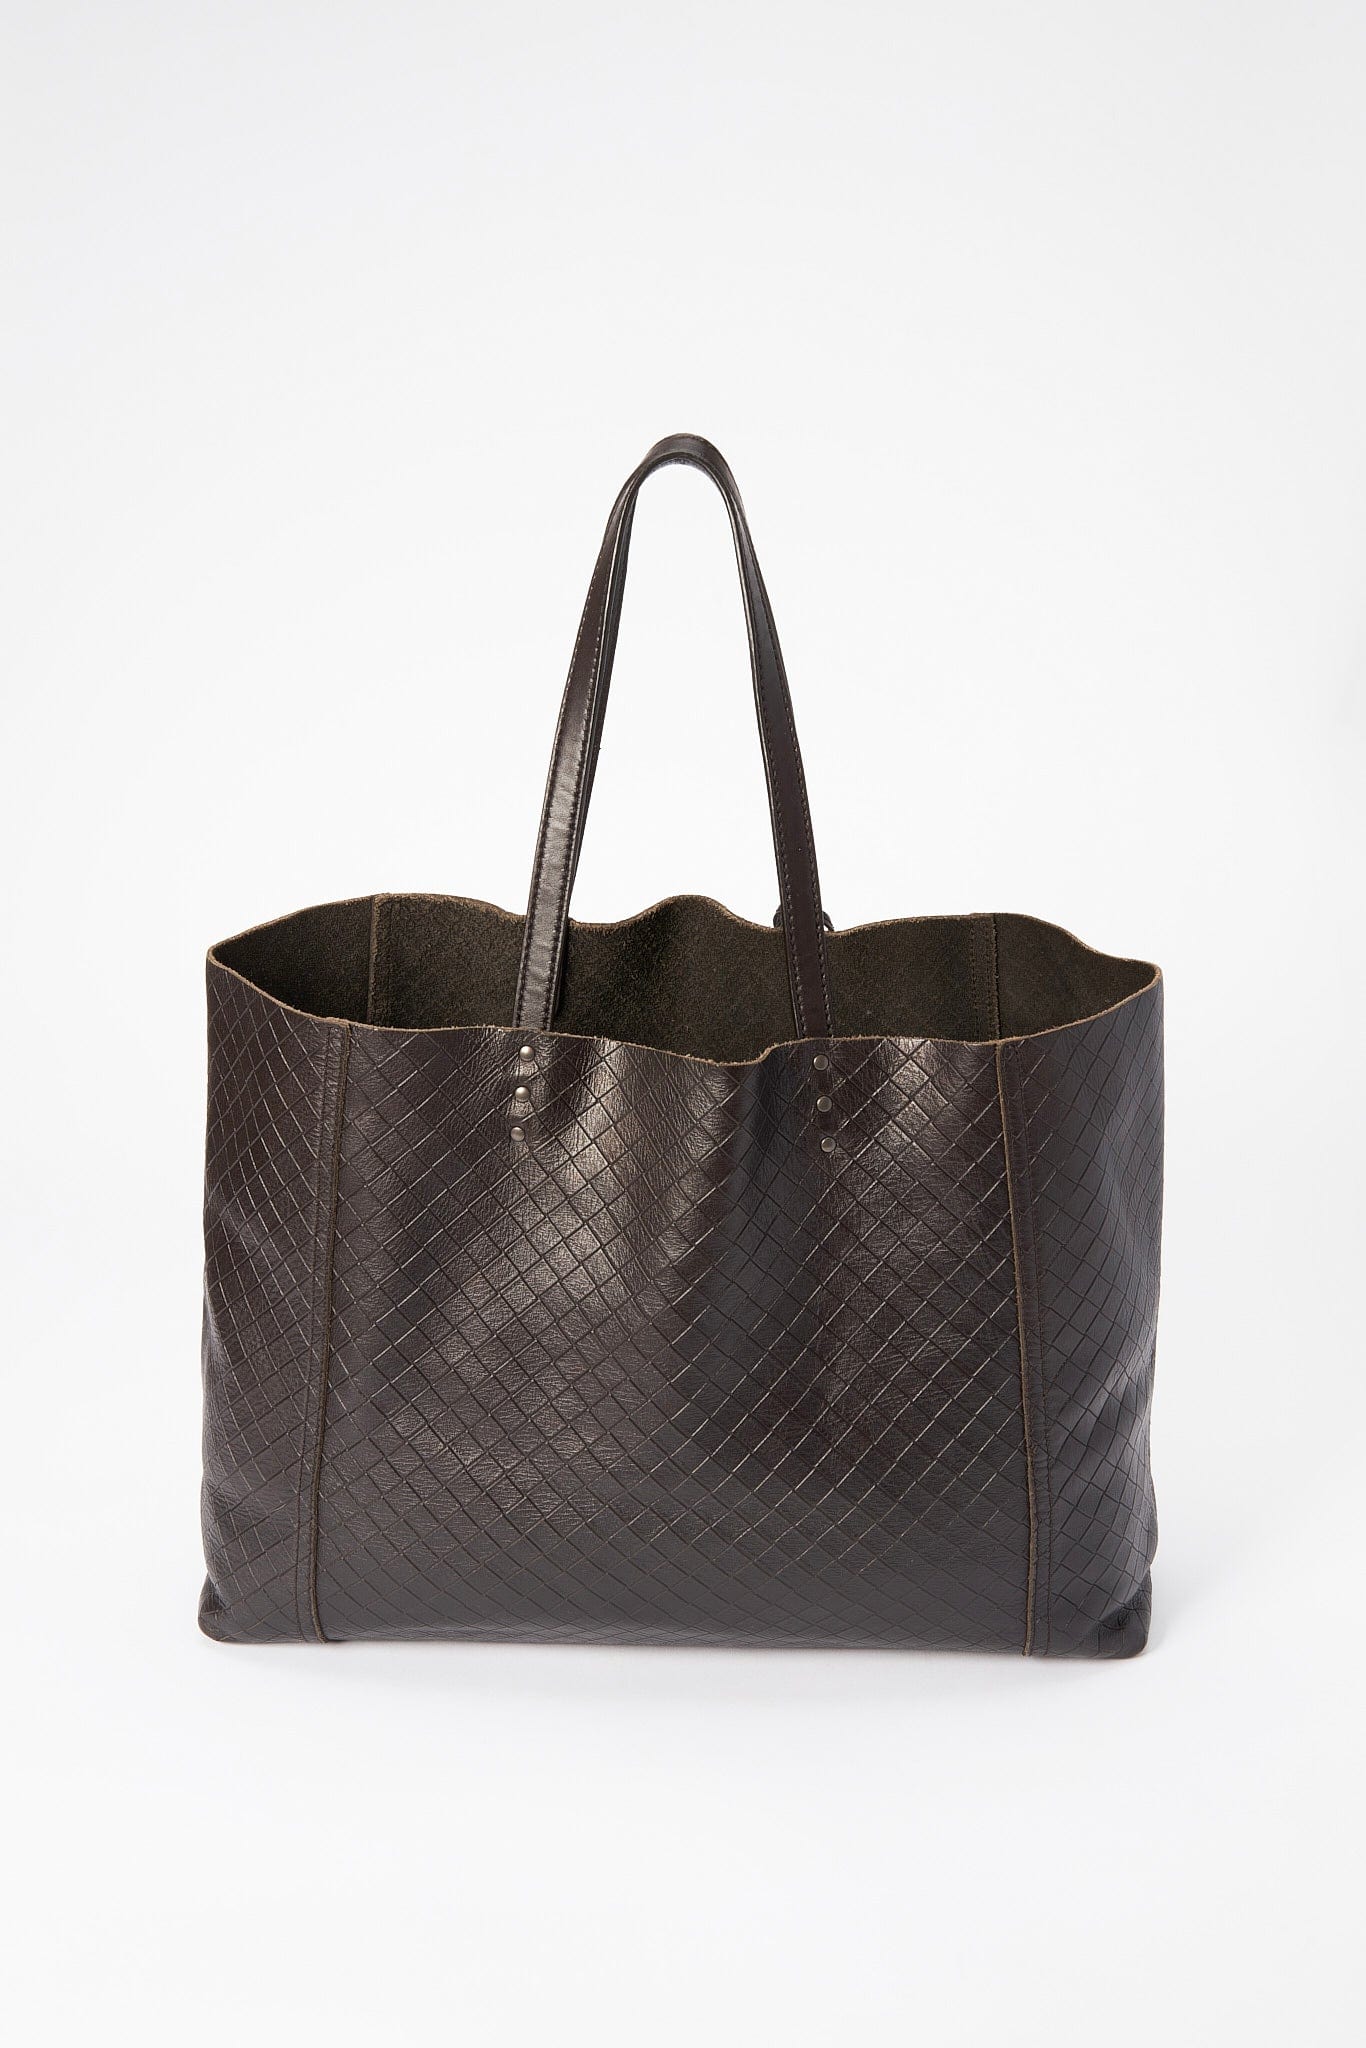 Bottega Veneta Leather Tote Bag with Butterfly Charm